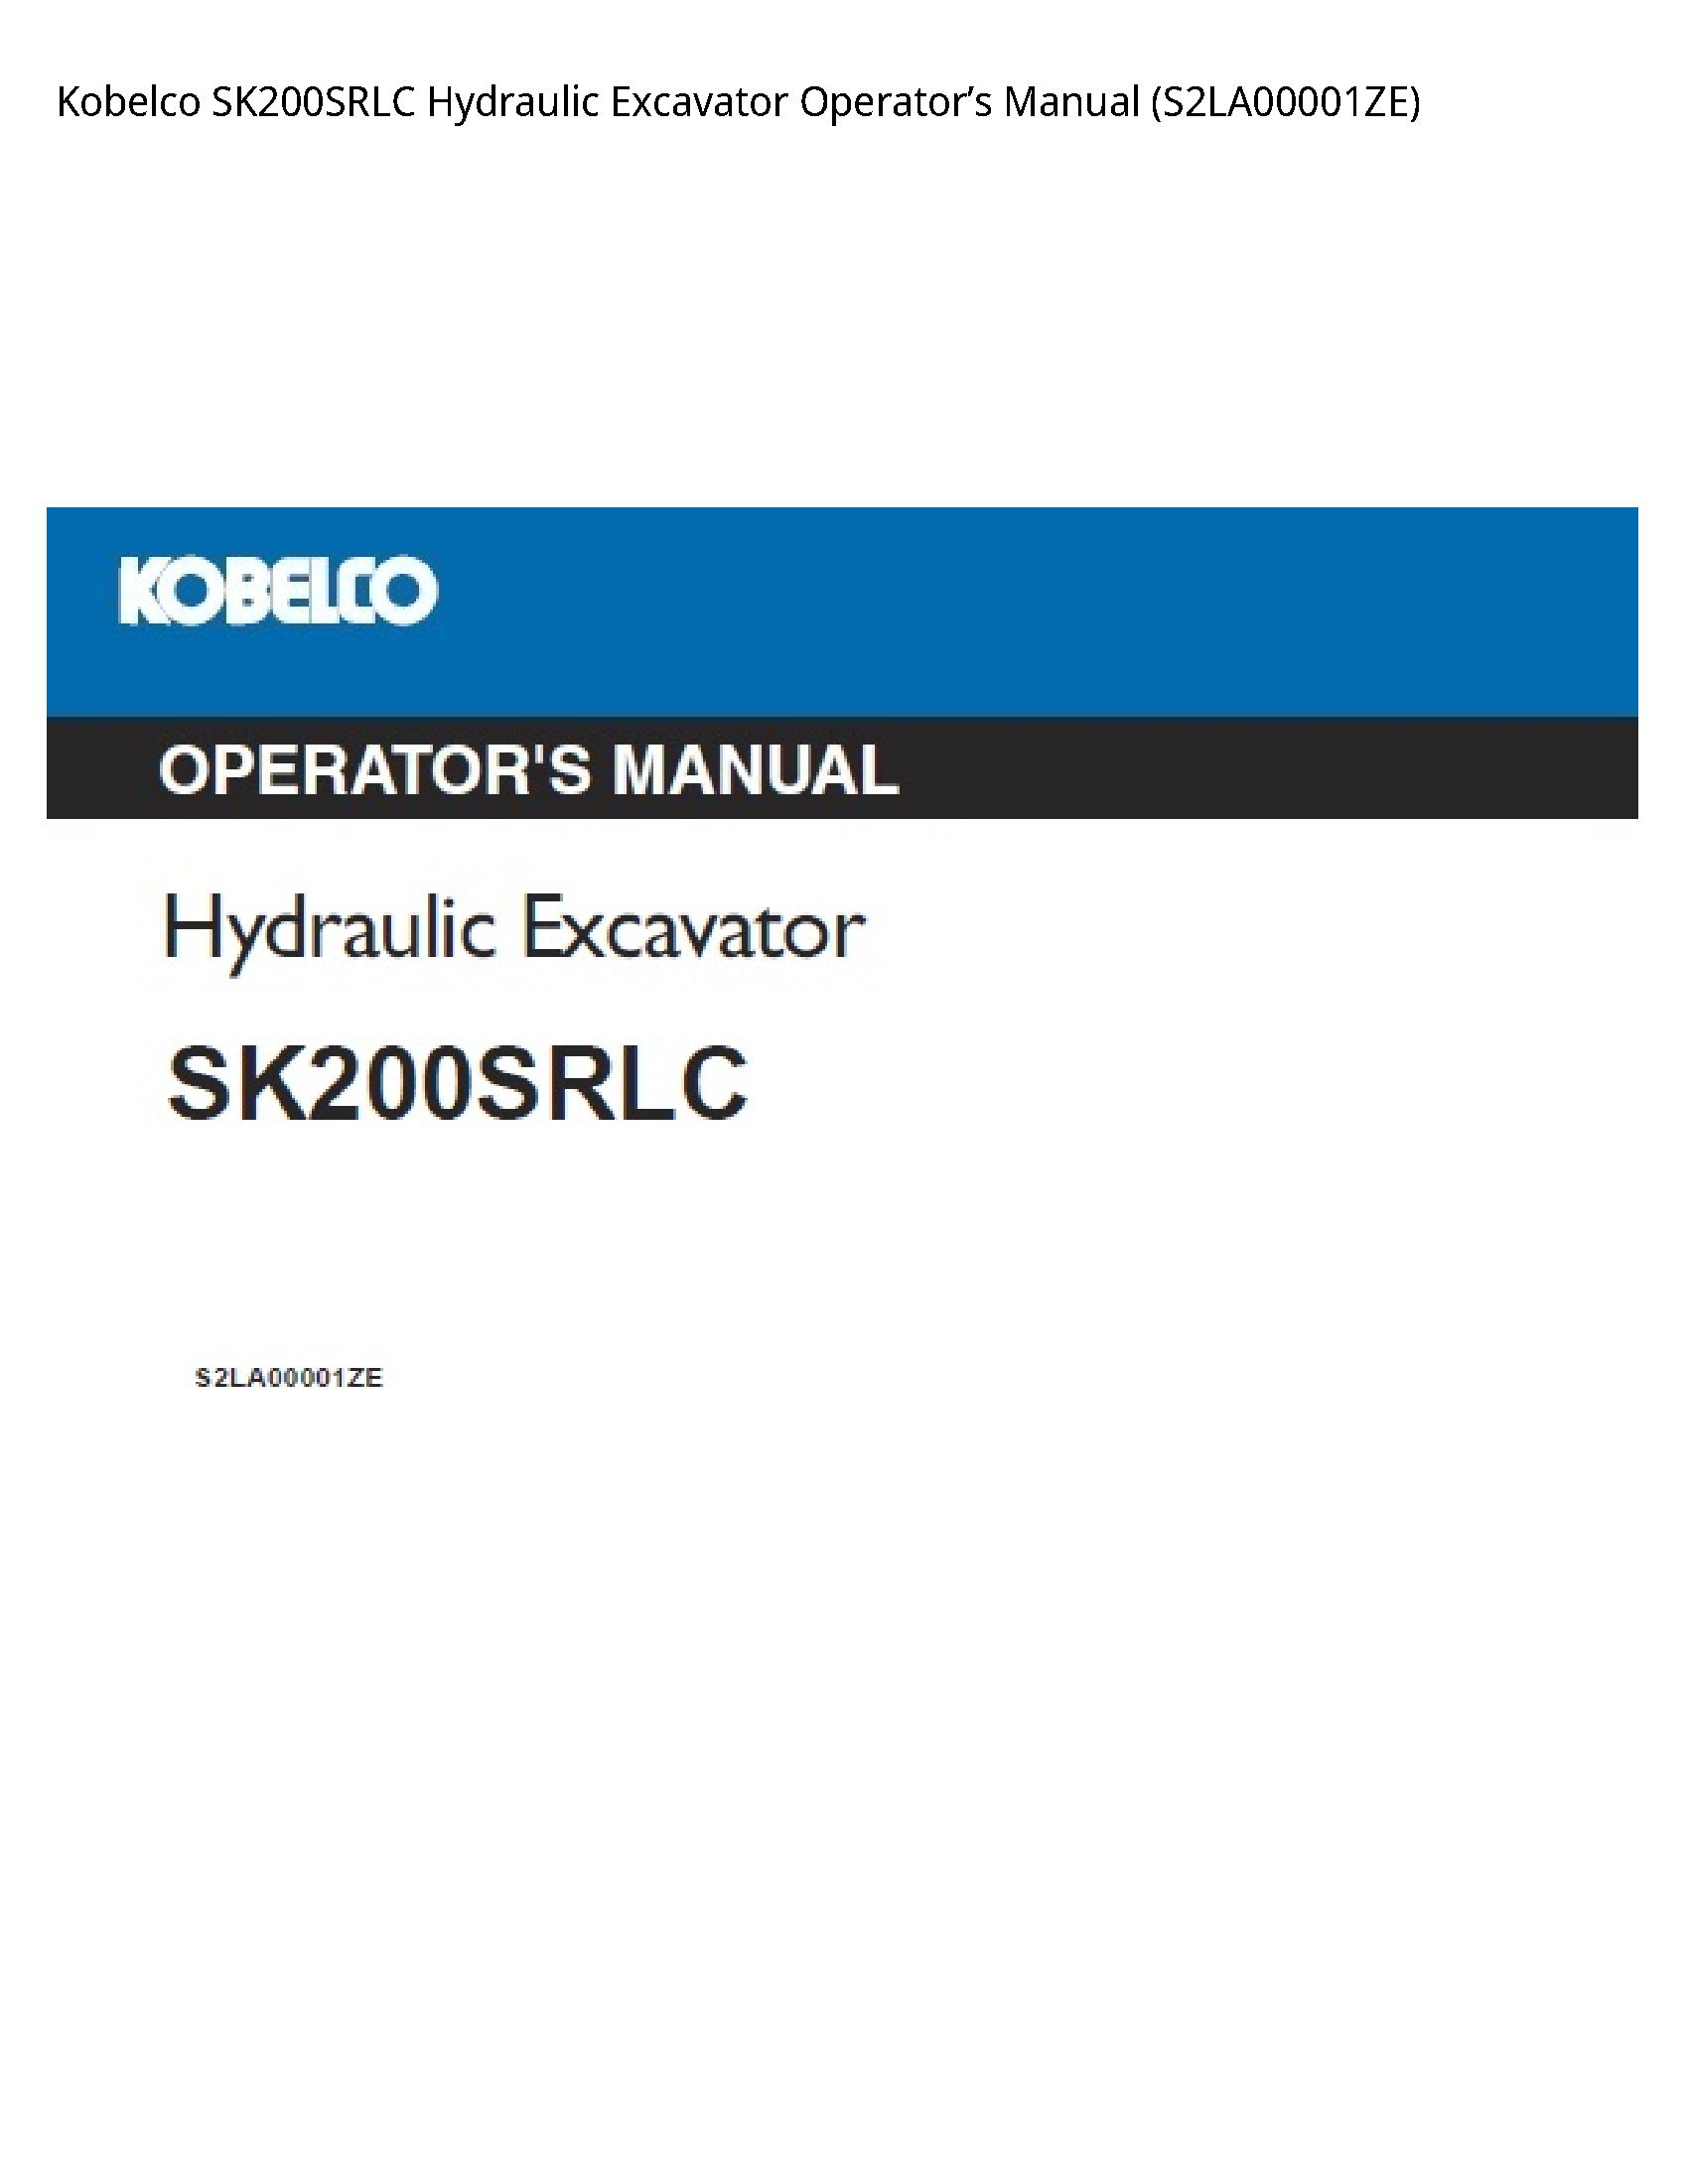 Kobelco SK200SRLC Hydraulic Excavator Operator’s manual